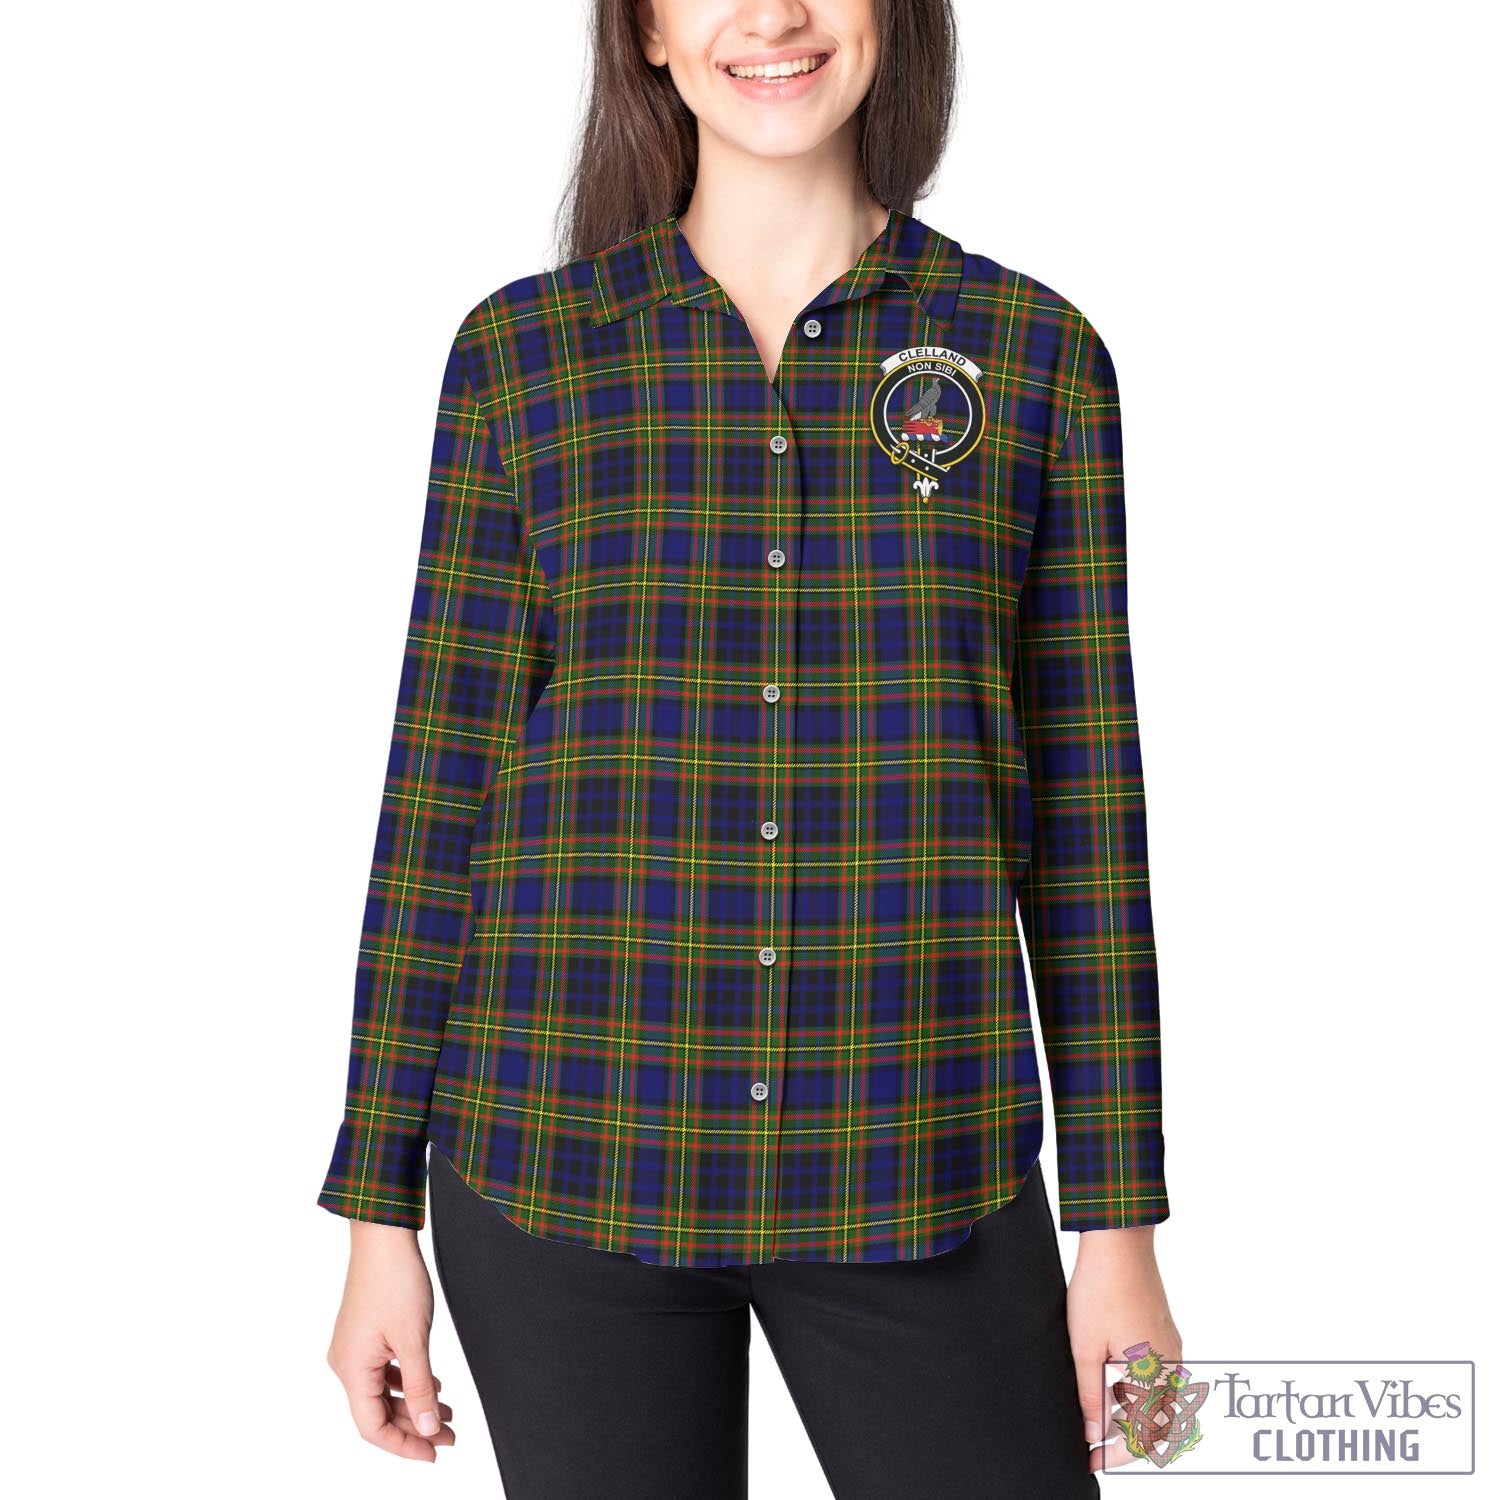 Tartan Vibes Clothing Clelland Modern Tartan Womens Casual Shirt with Family Crest